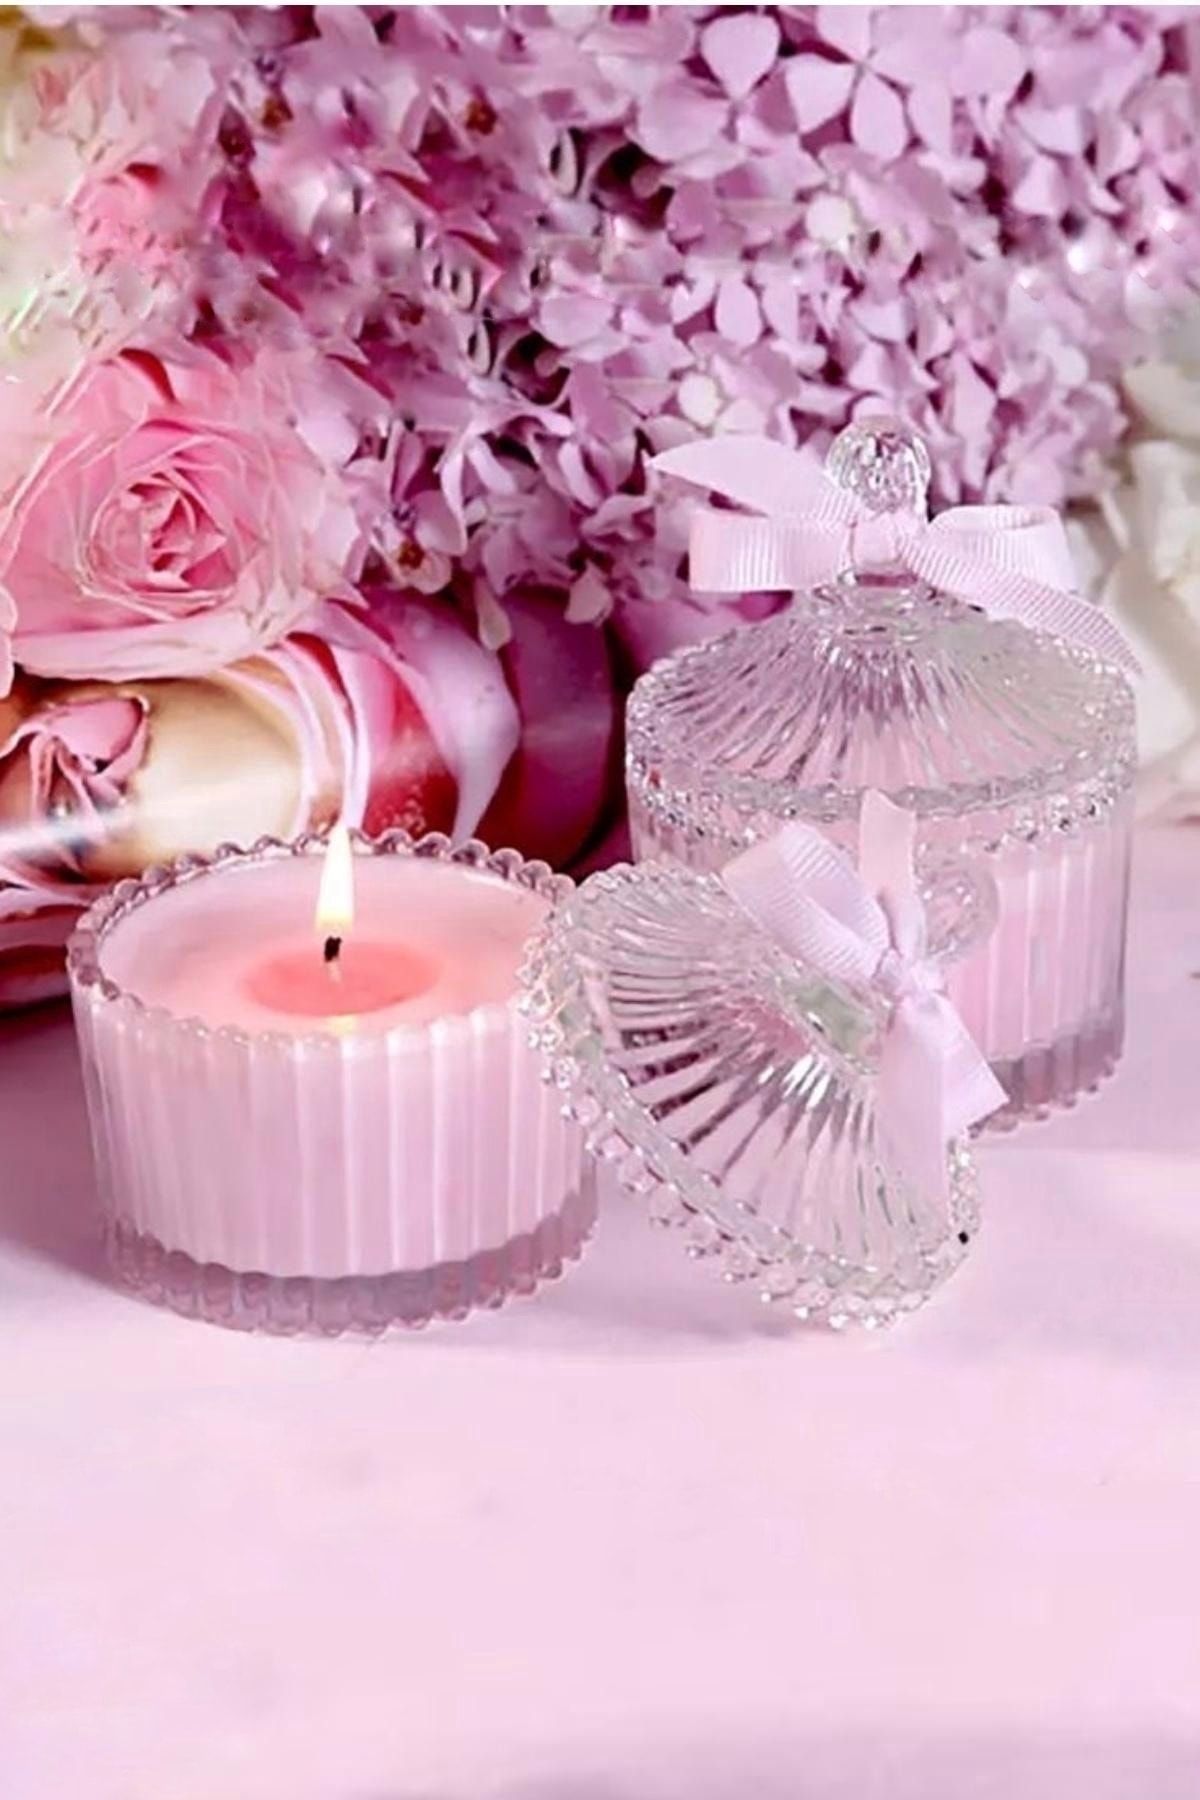 LALEZEN HOME شمع گل رز (با رایحه رز) شفاف جعبه پلاستیکی میکا با درب محمدی